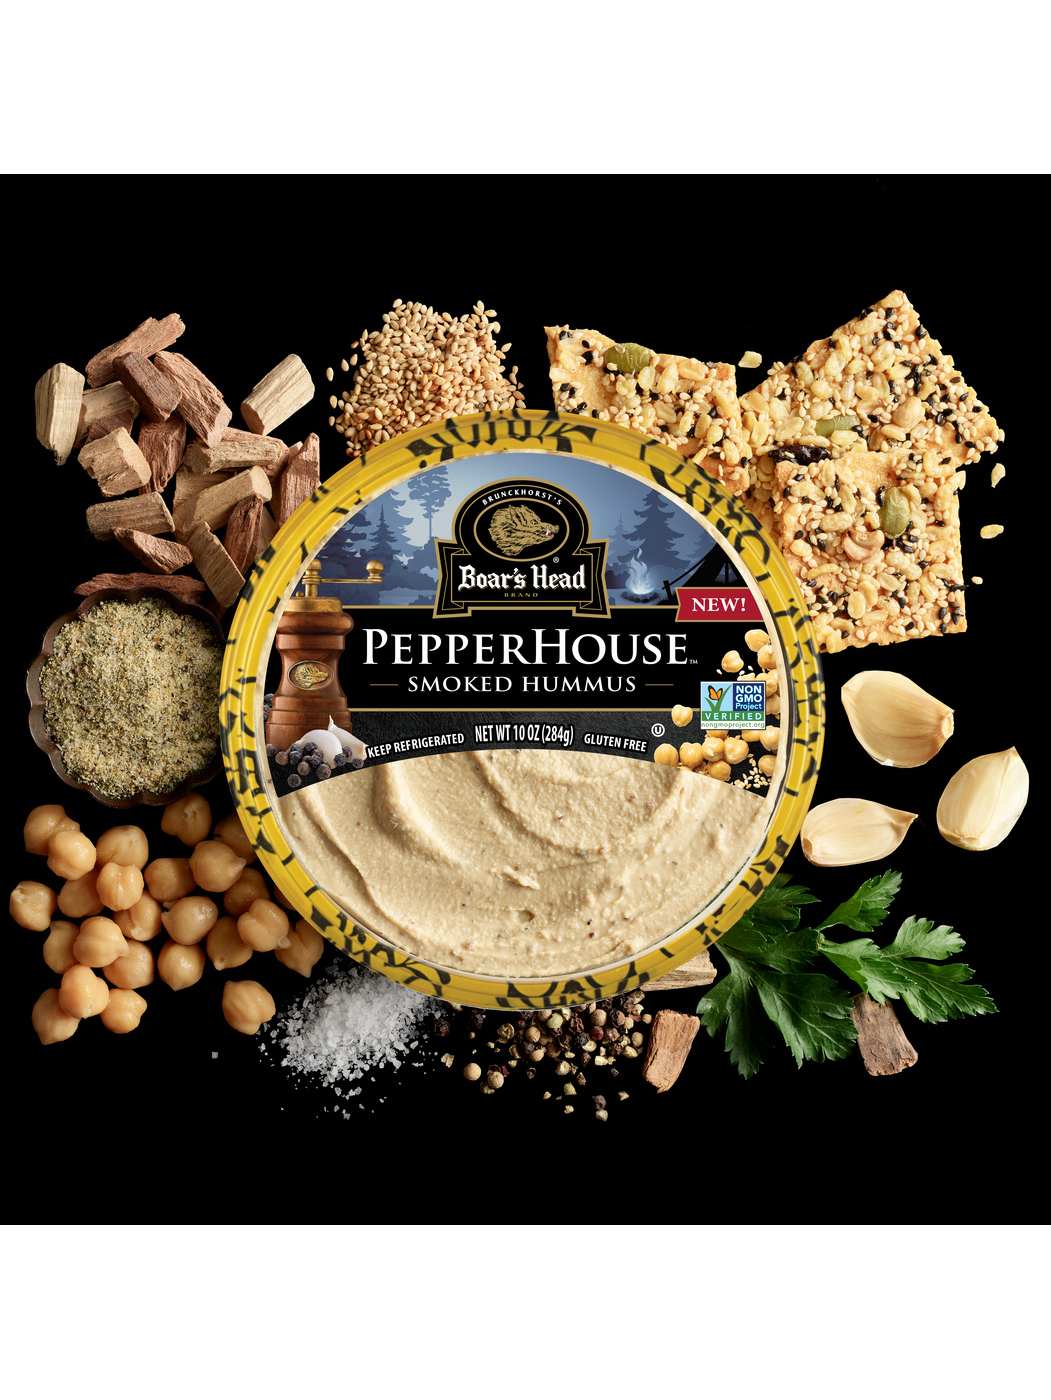 Boar's Head PepperHouse Smoked Hummus; image 2 of 2